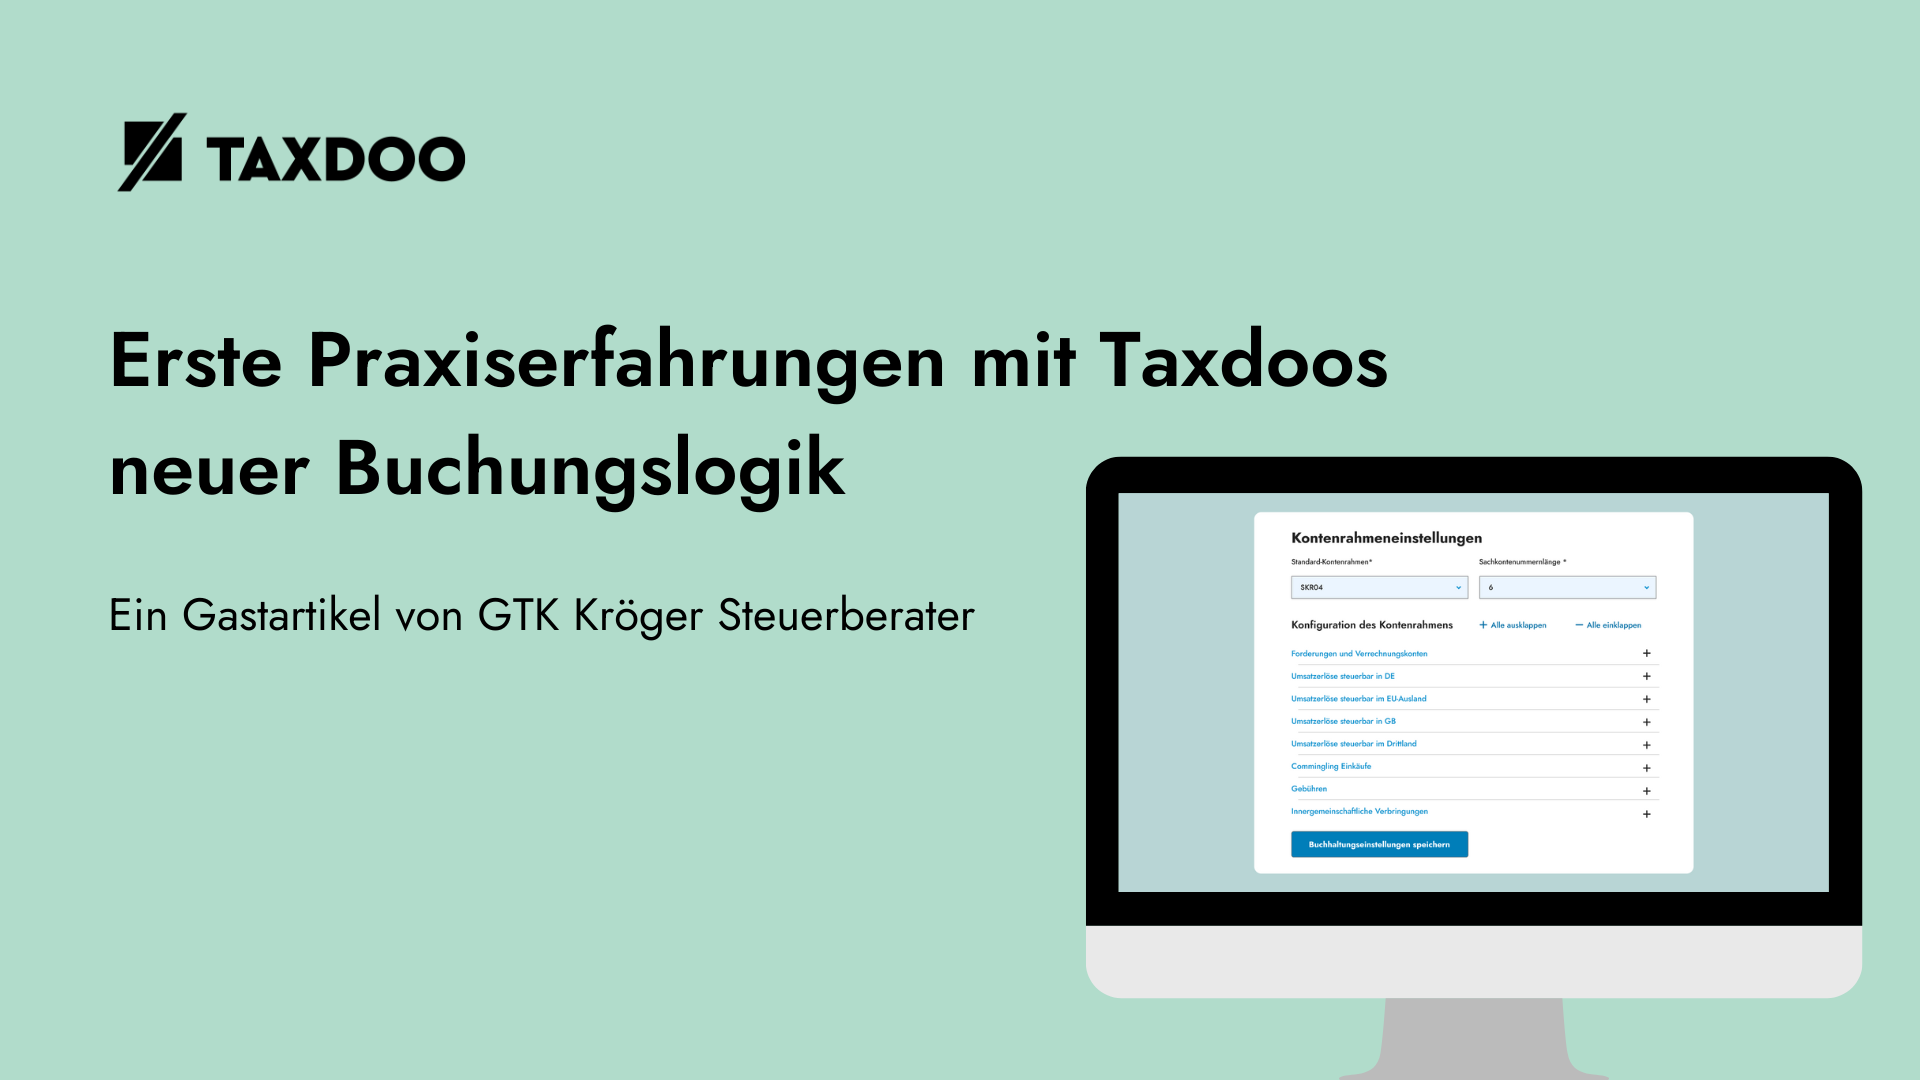 GTK Kröger Steuerberater: Erste Praxiserfahrungen mit Taxdoos neuer Buchungslogik